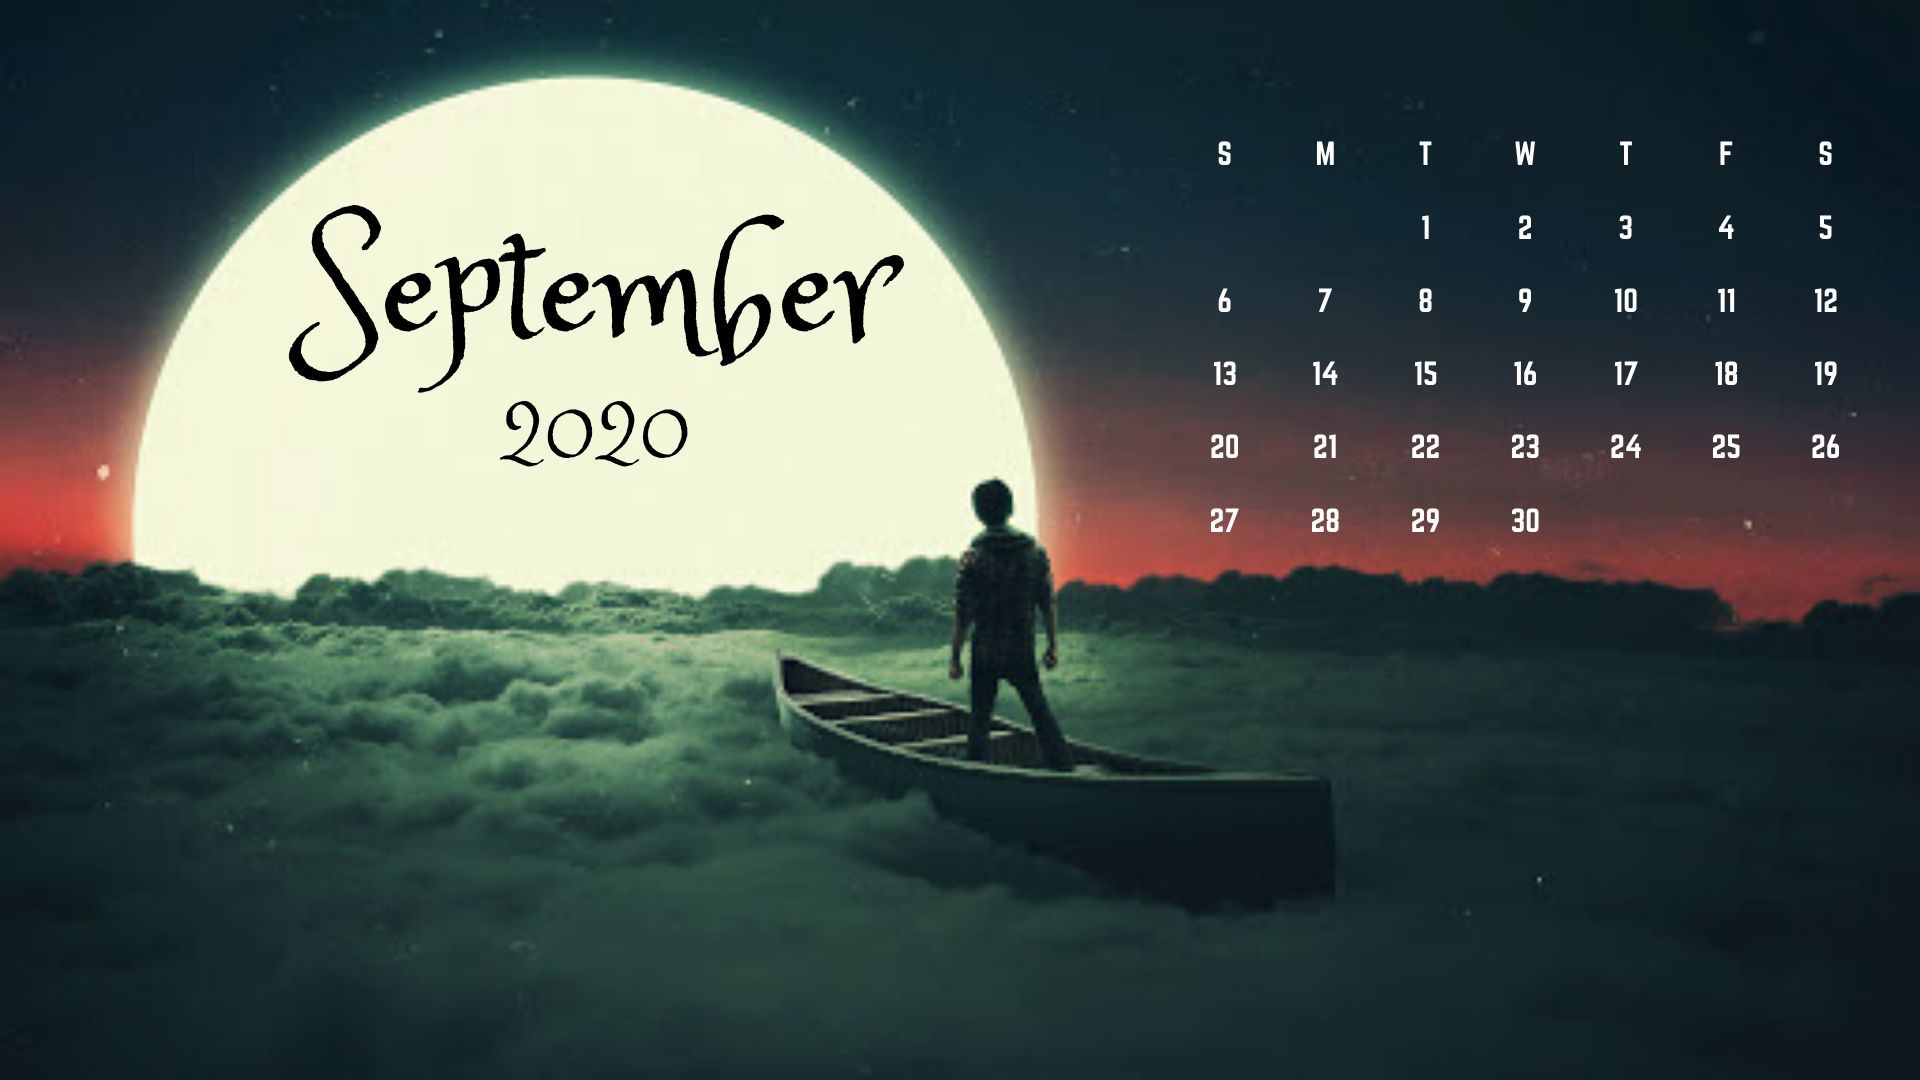 September 2020 Desktop Calendar Wallpaper Download